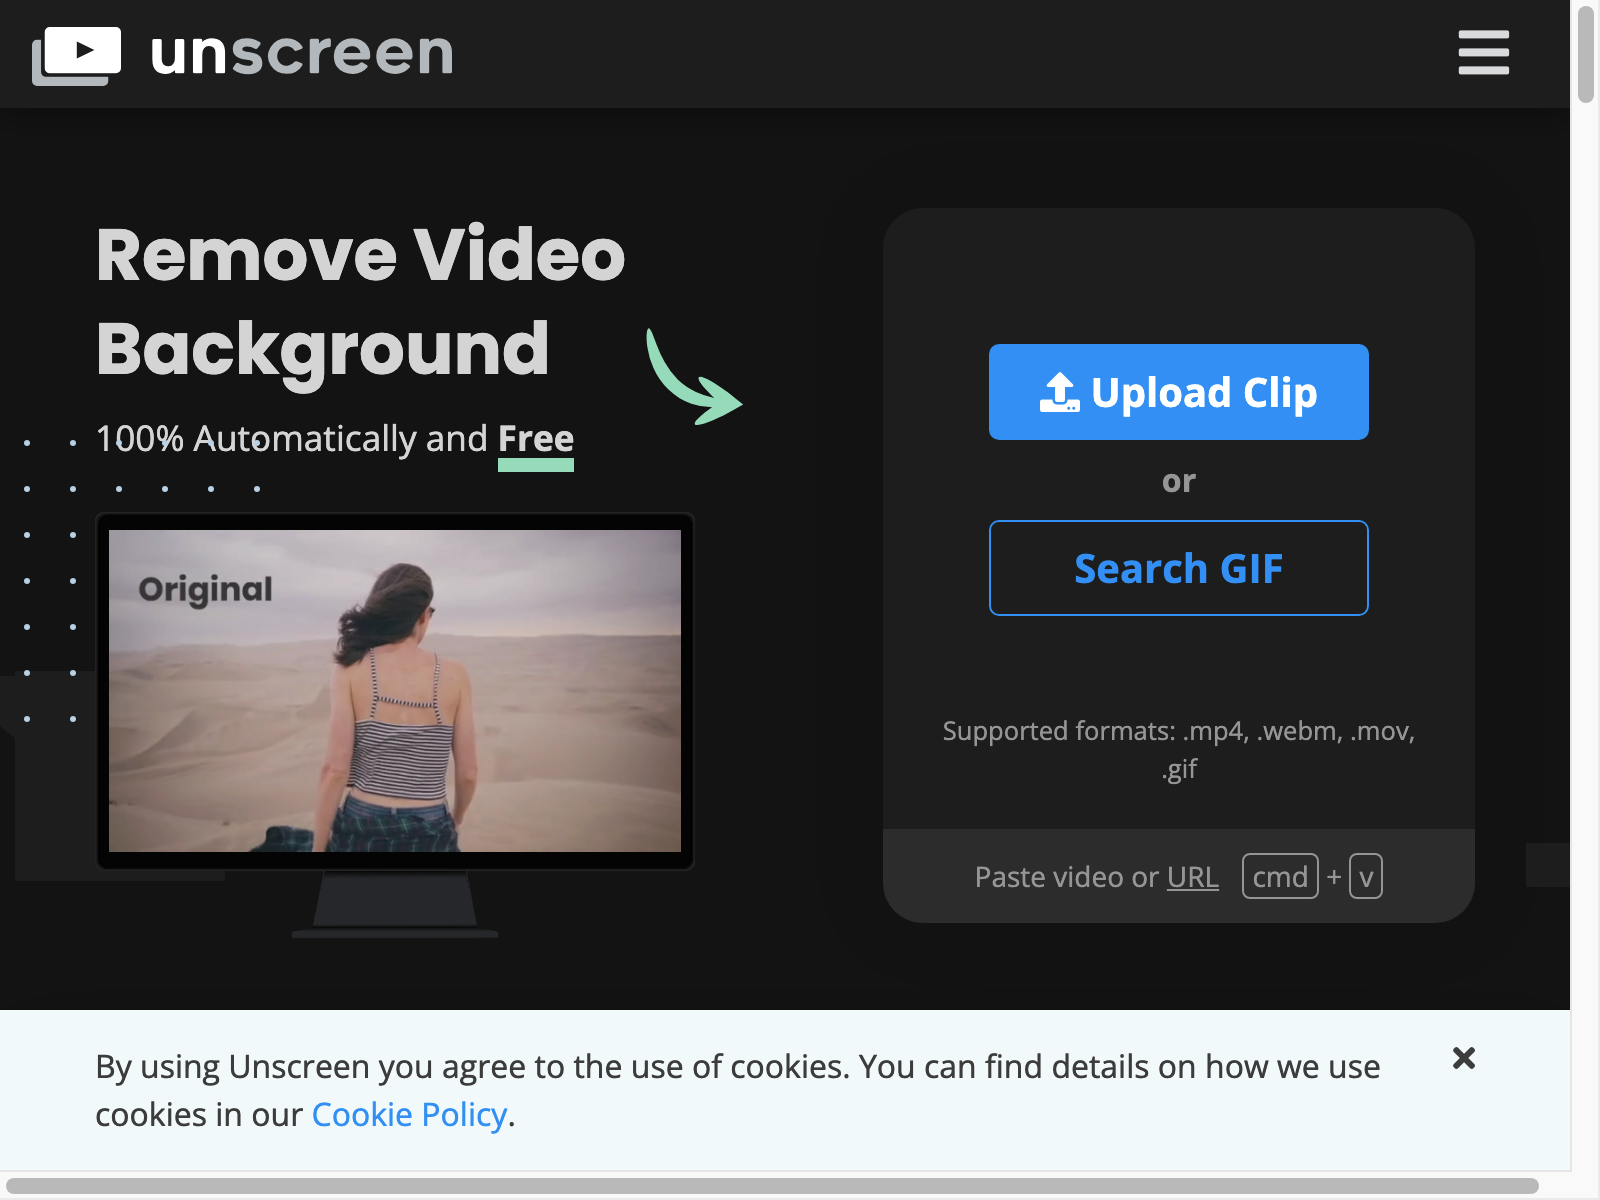 unscreen Review: Pros, Cons, Alternatives